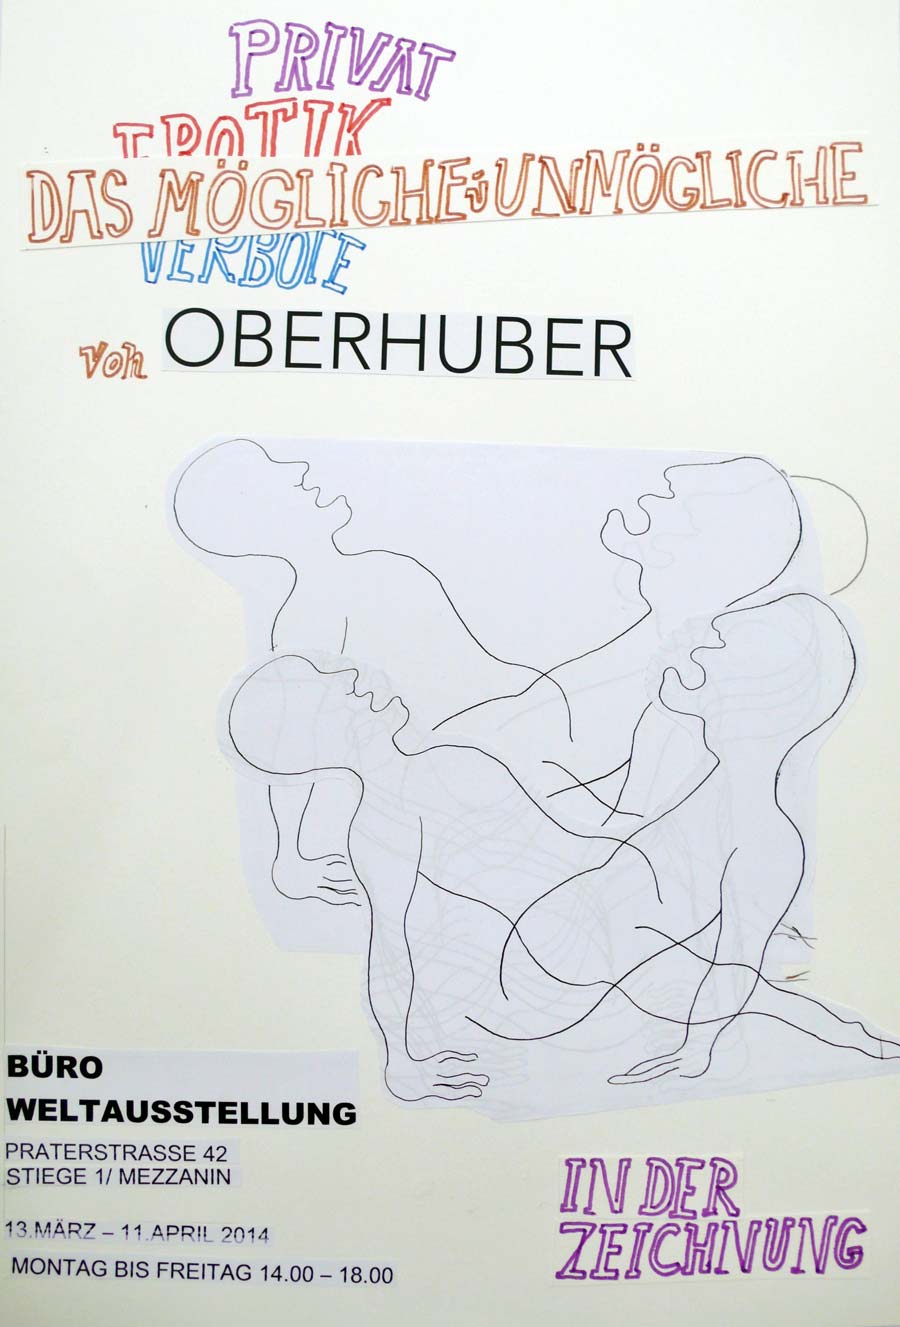 Wiener Art Foundation